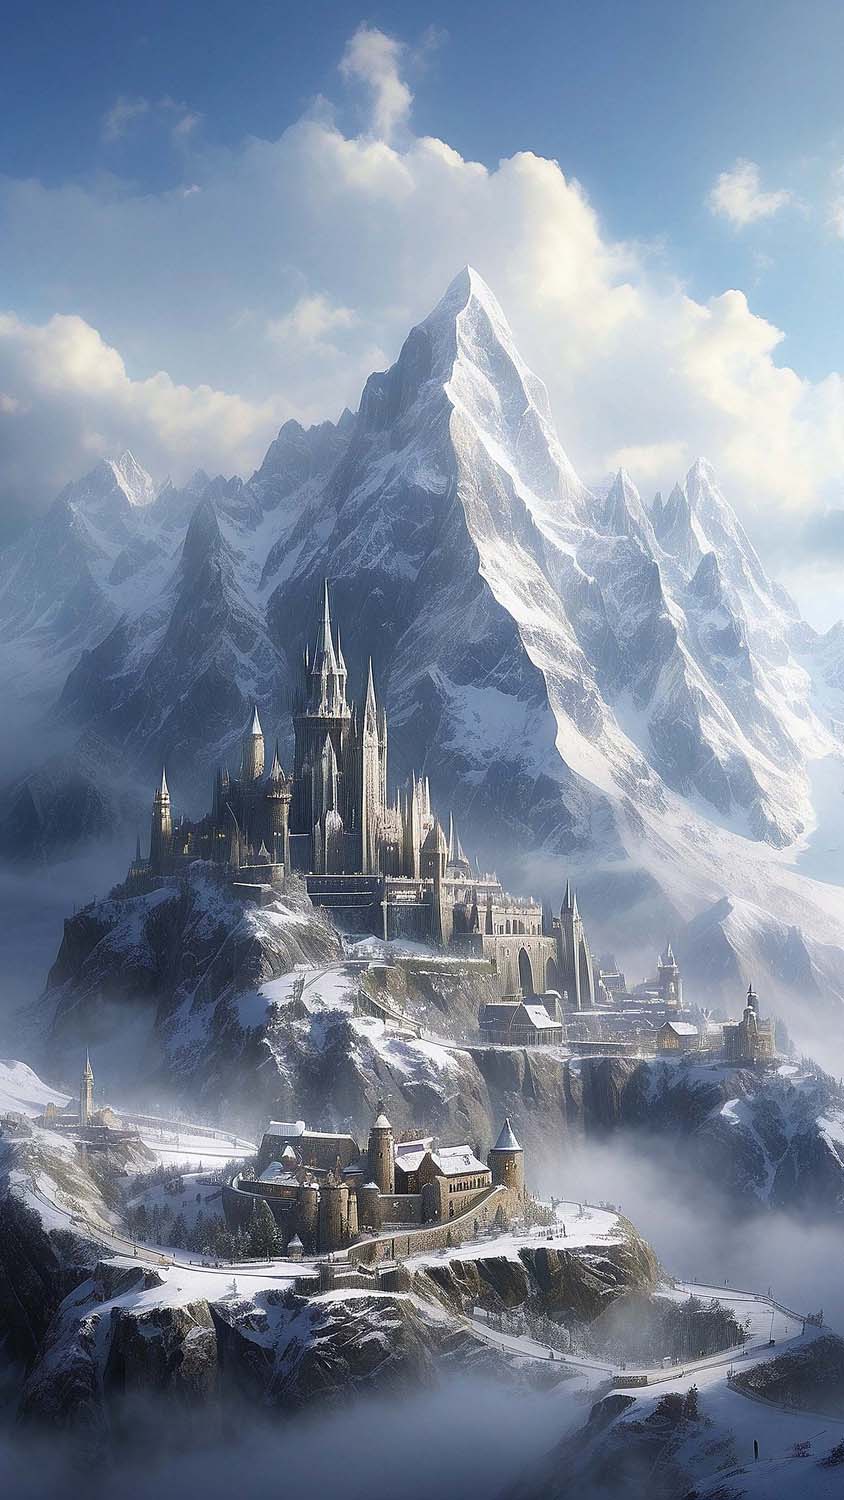 Snow Mountain Castle